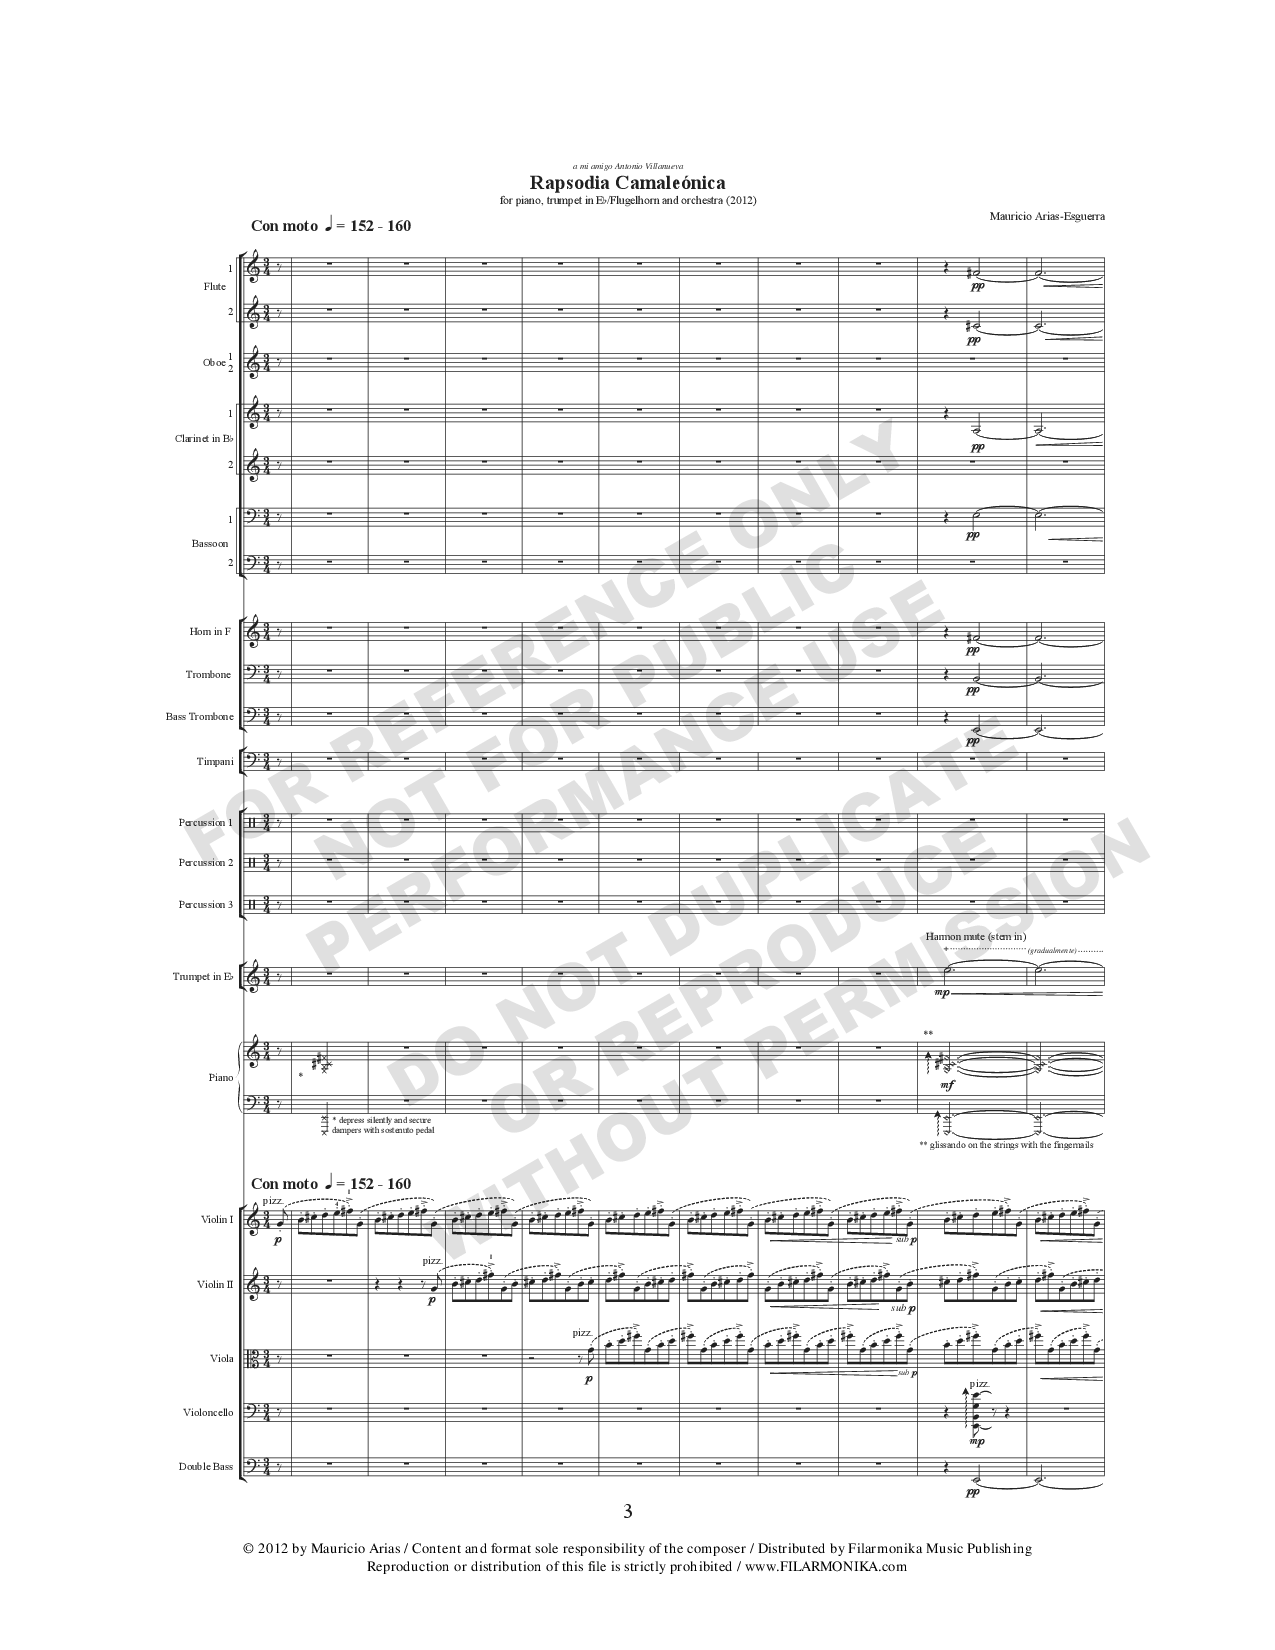 Rapsodia camaleónica, for trumpet, piano, and orchestra